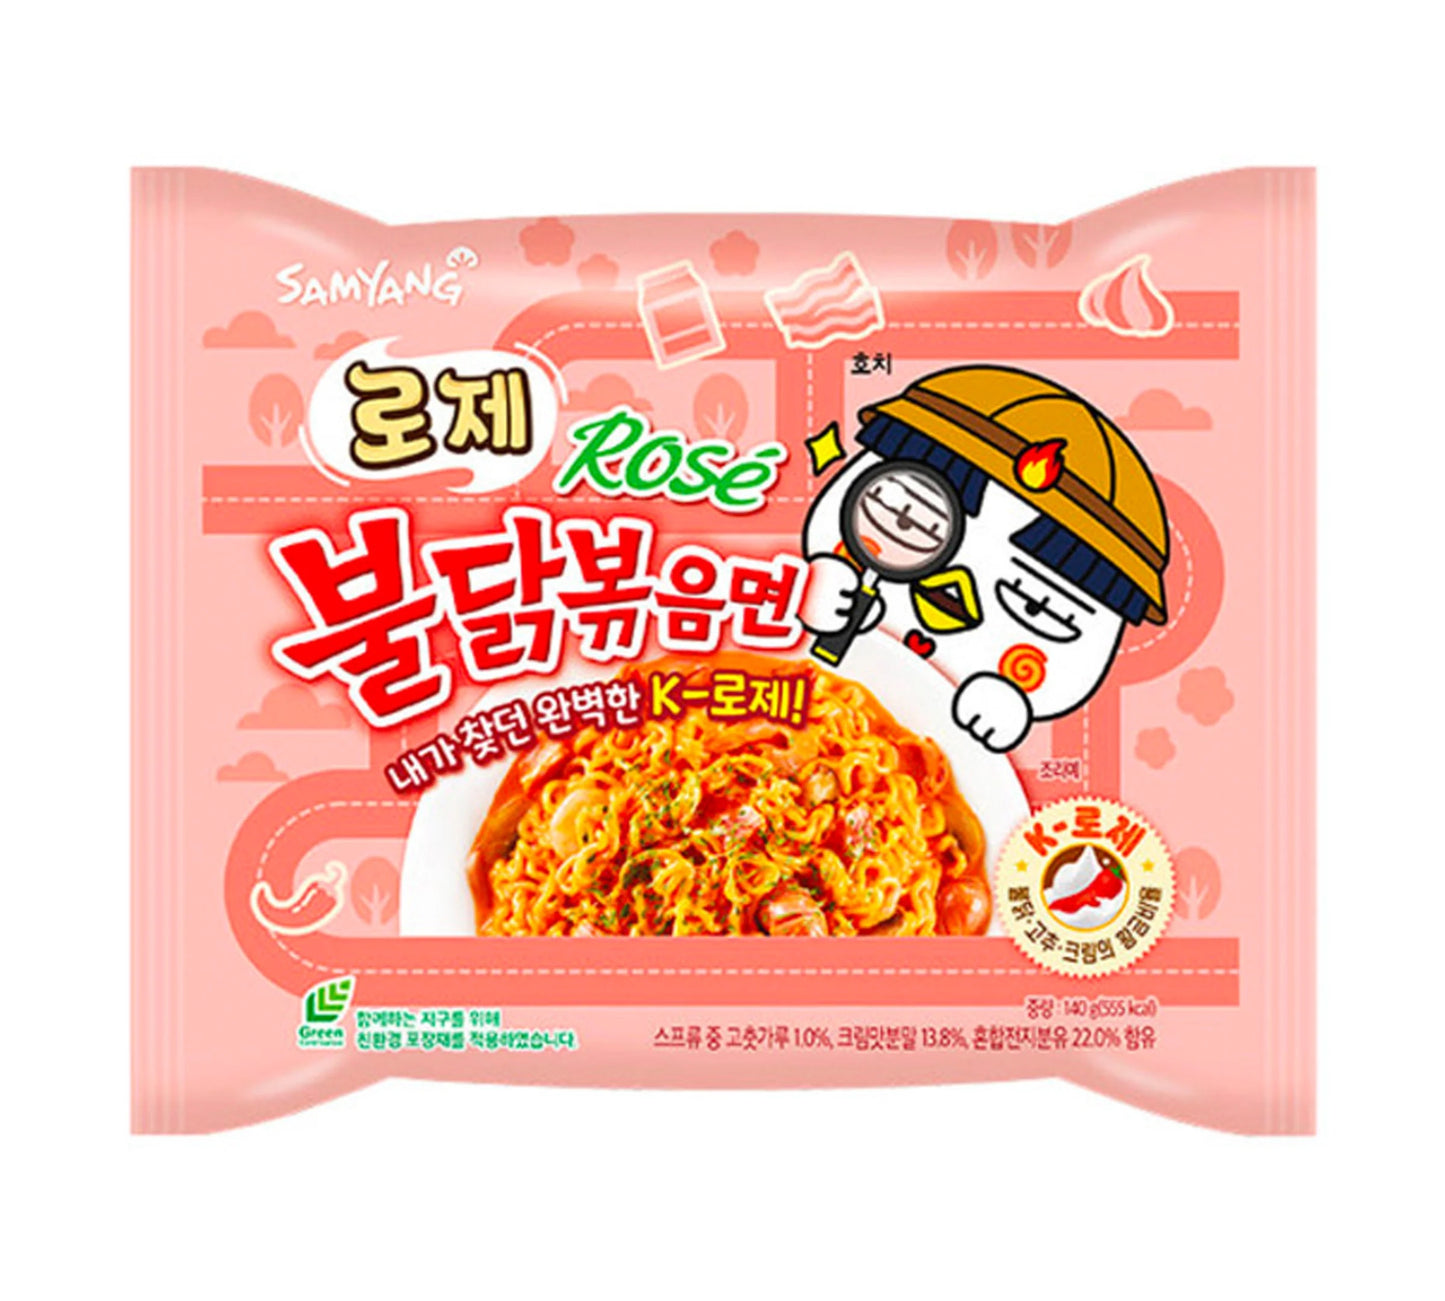 Samyang Rose Carbonara Ramen Noodles - 140g